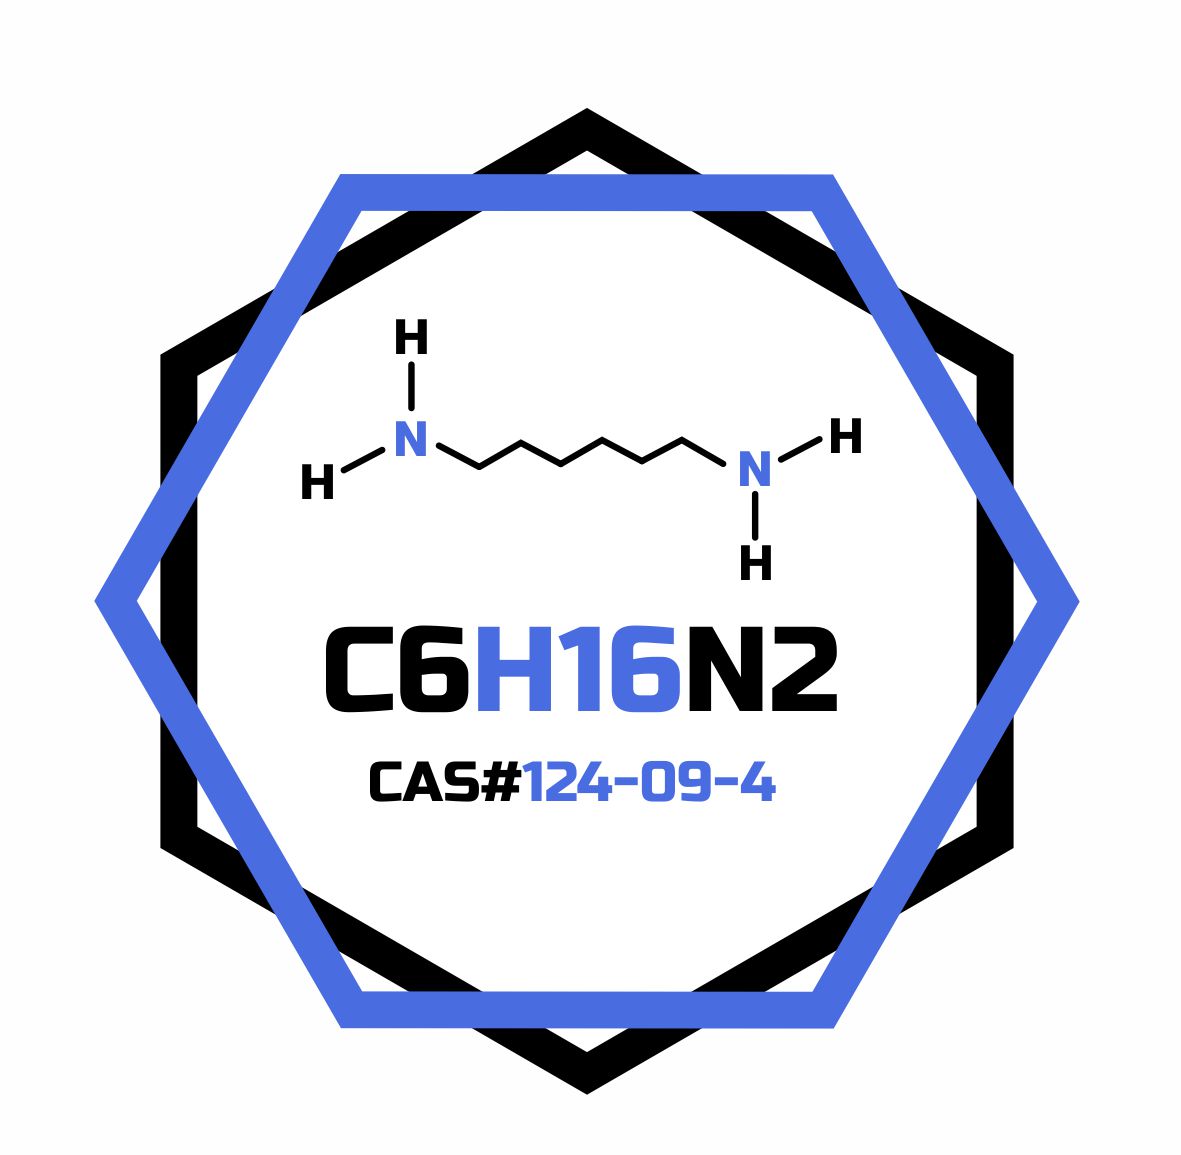 1,6-Hexanediamine 70% Technical, CAS 124-09-4